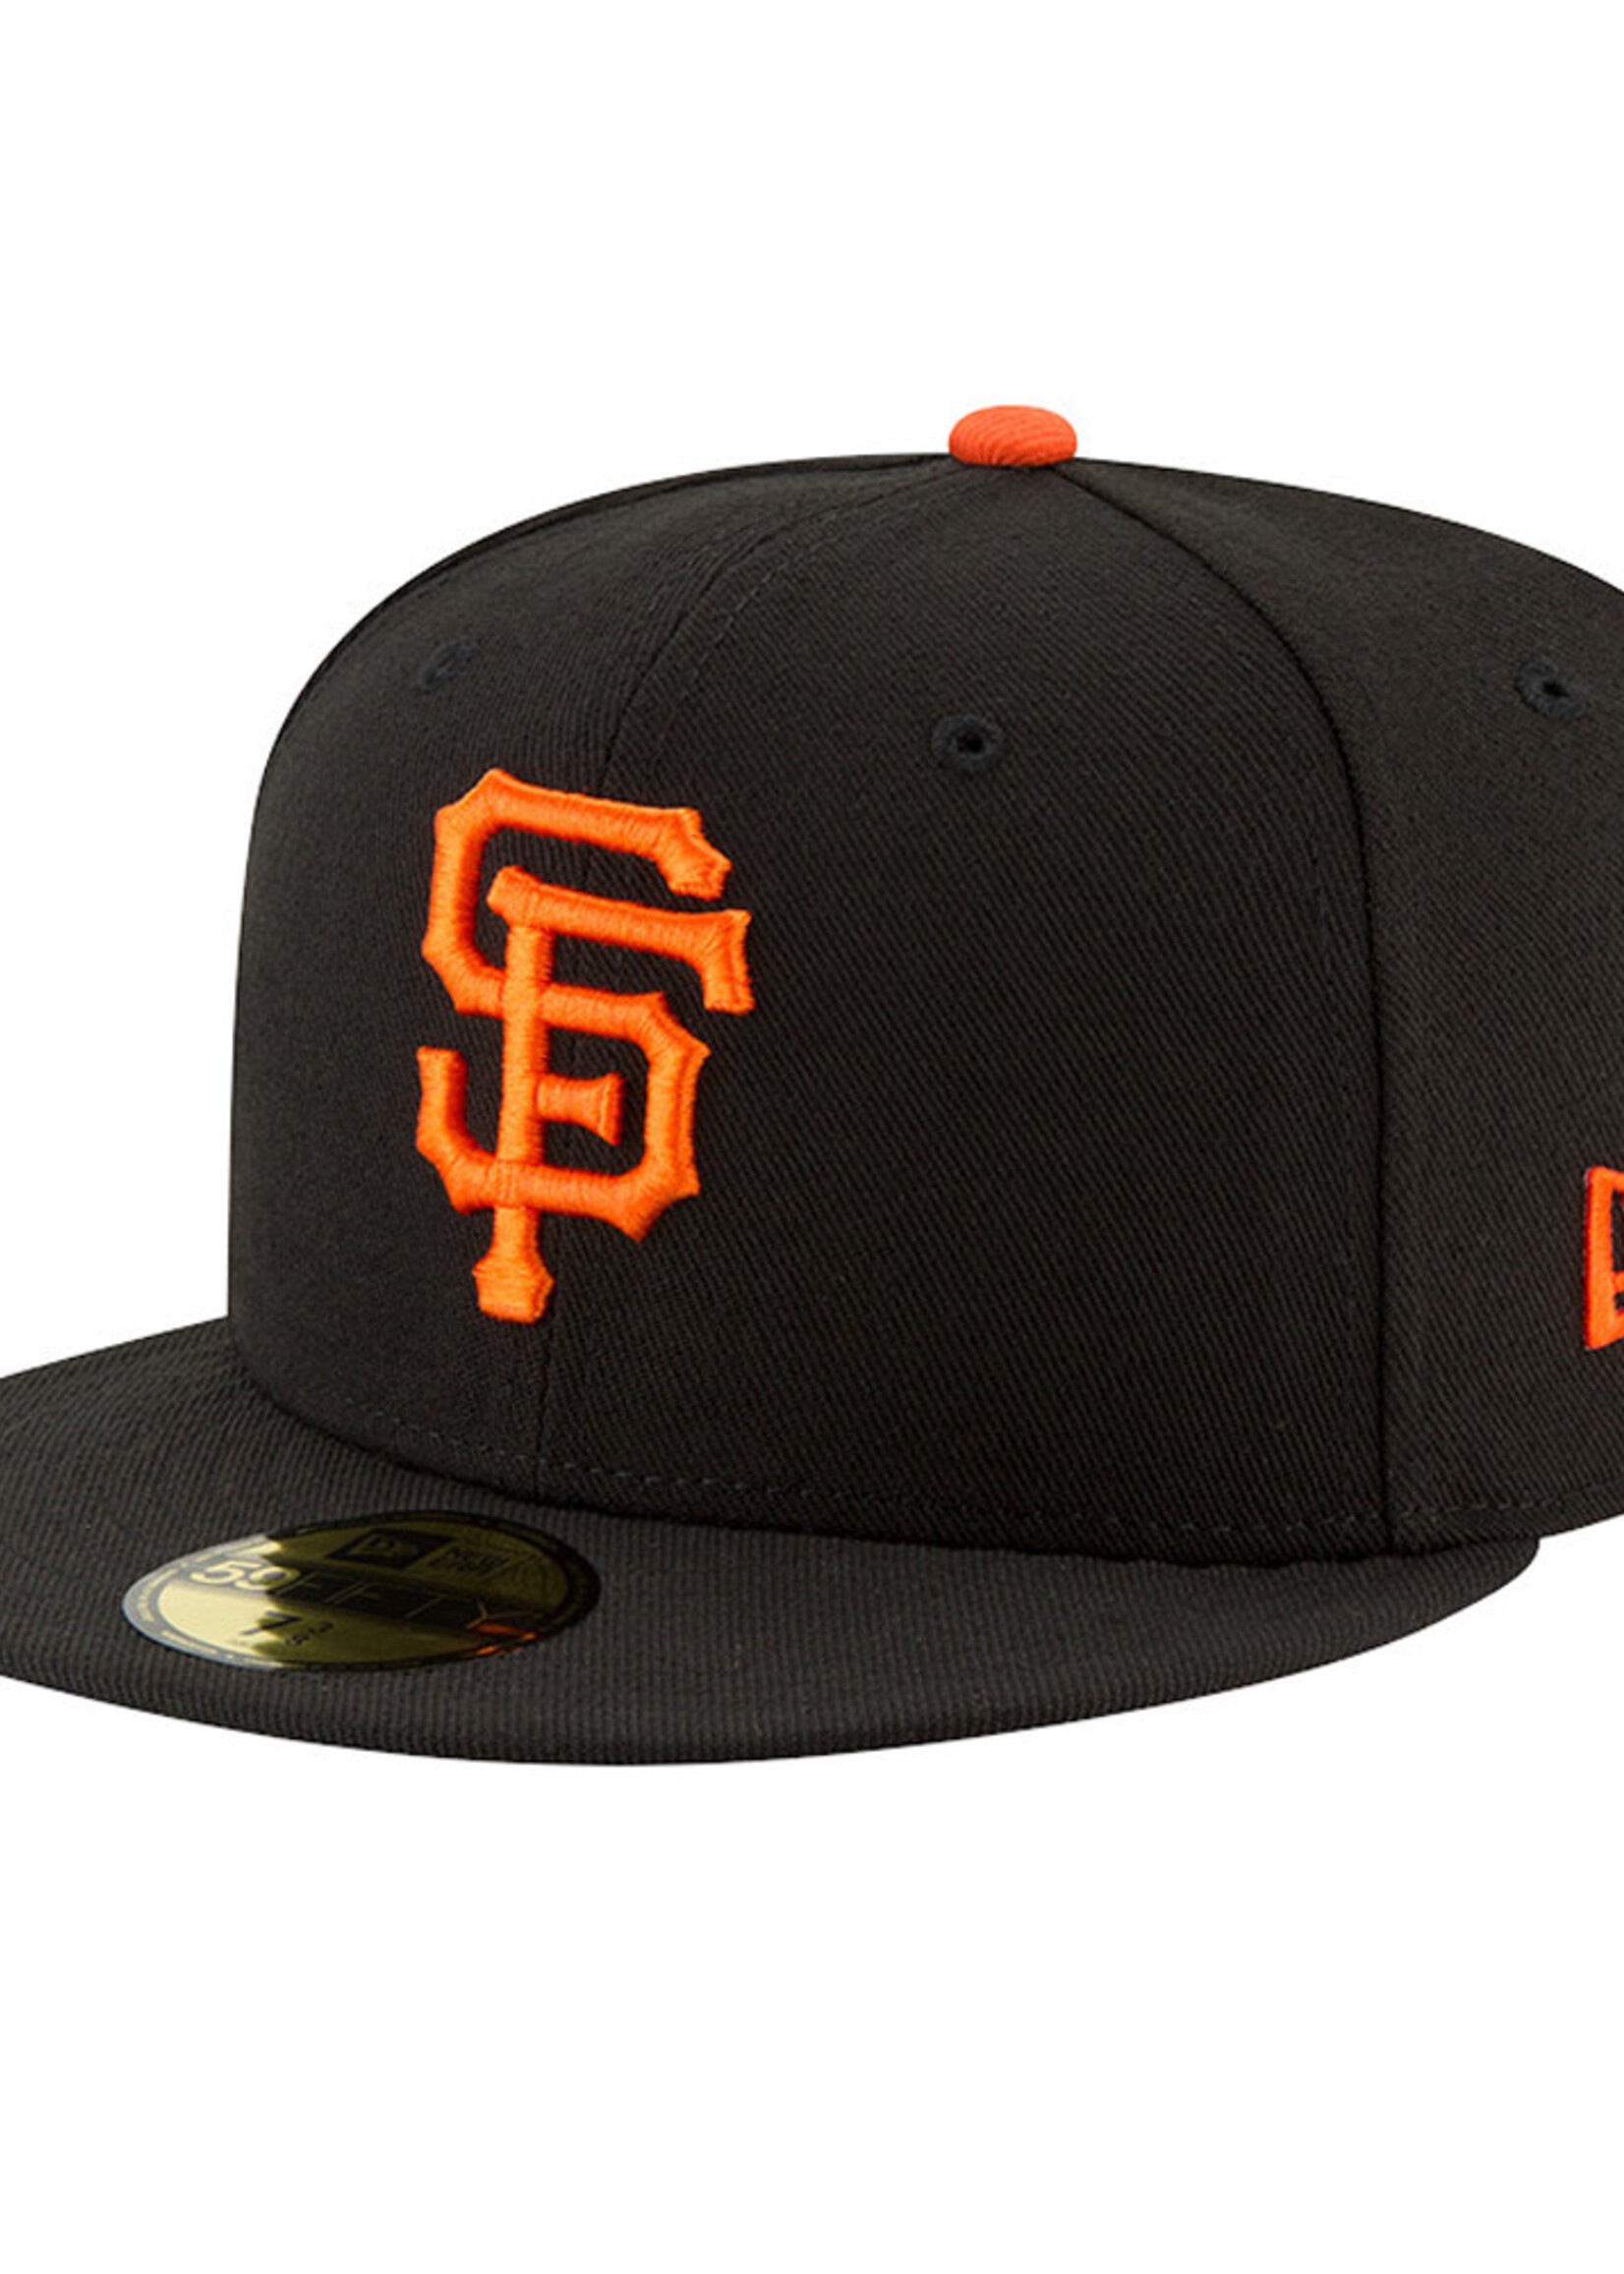 New Era San Francisco Giants Fitted Cap Black Orange